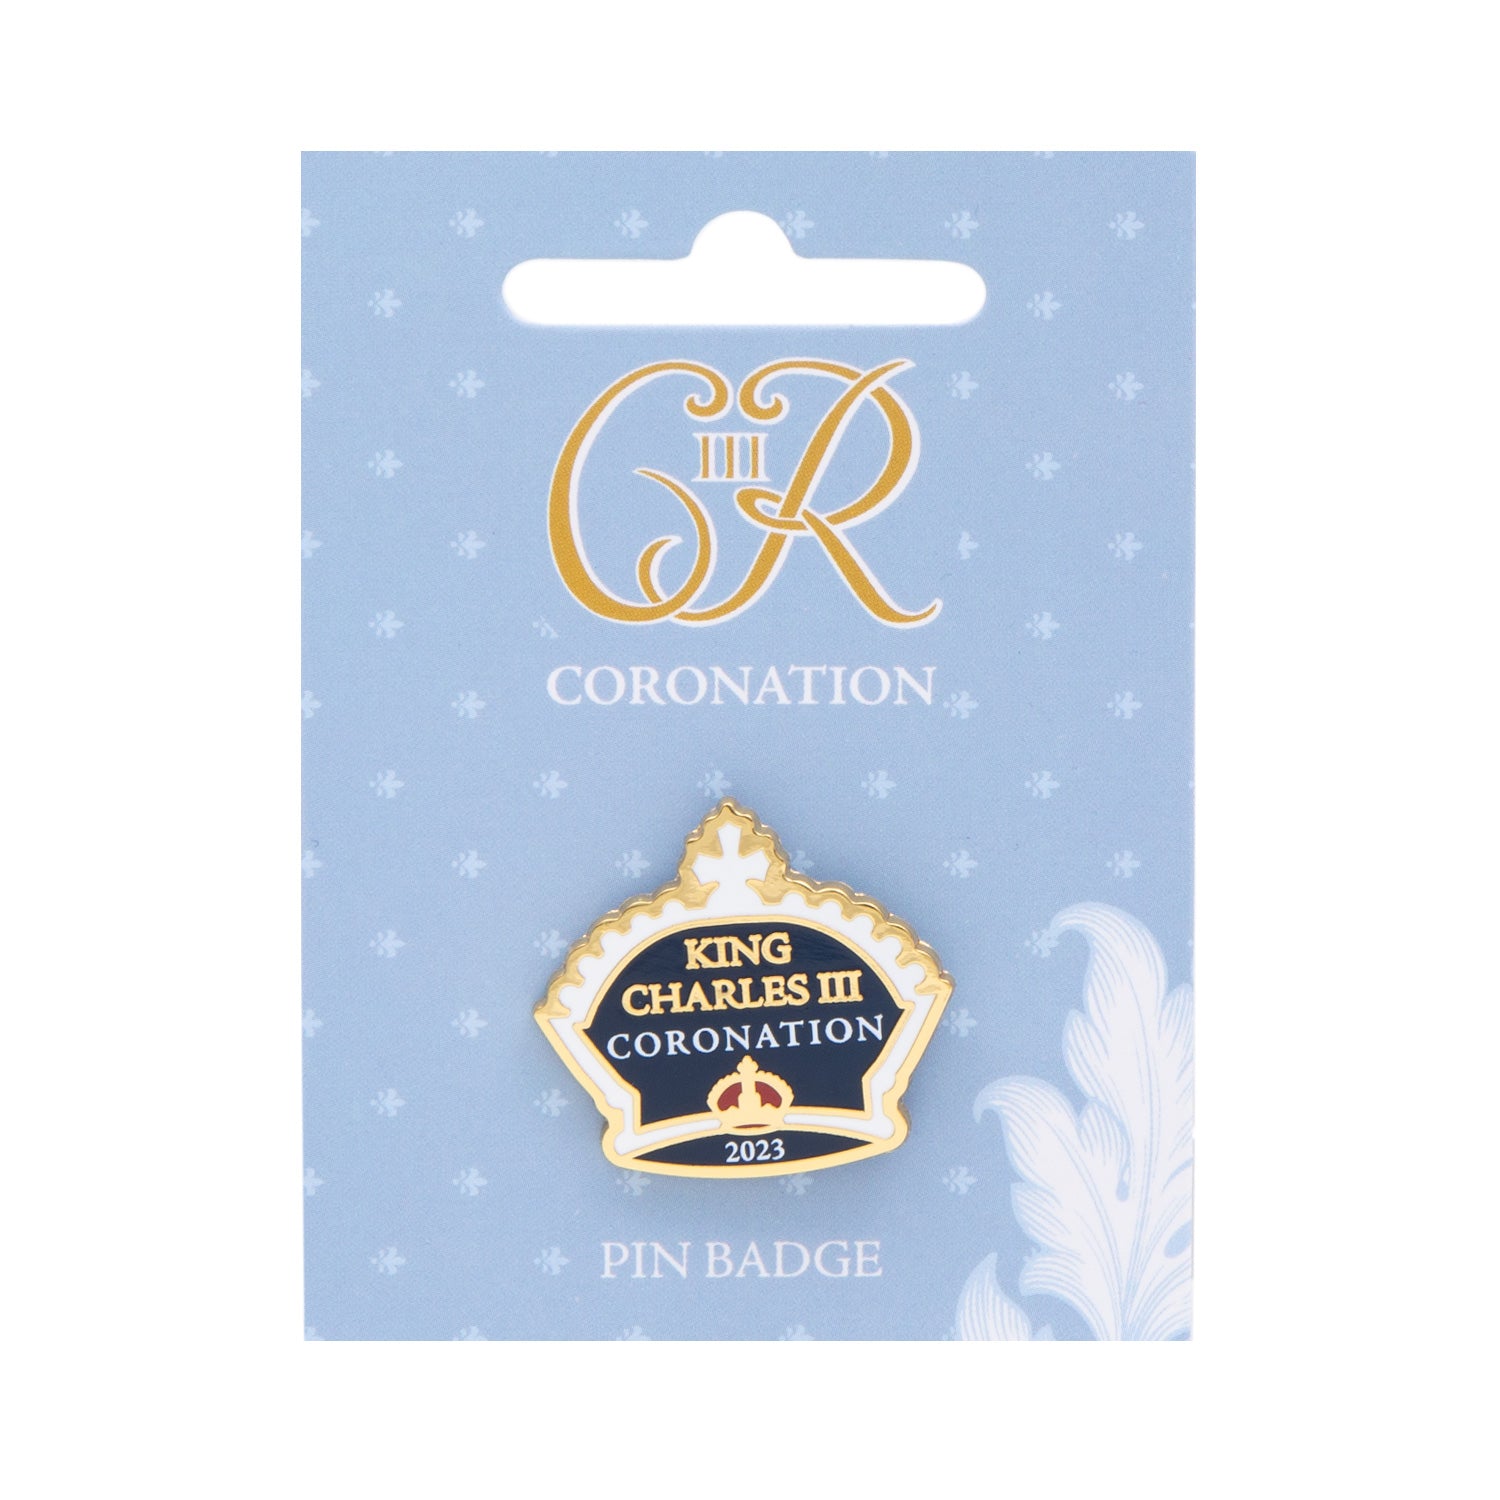 King Charles III Coronation Regalia Pin Badge